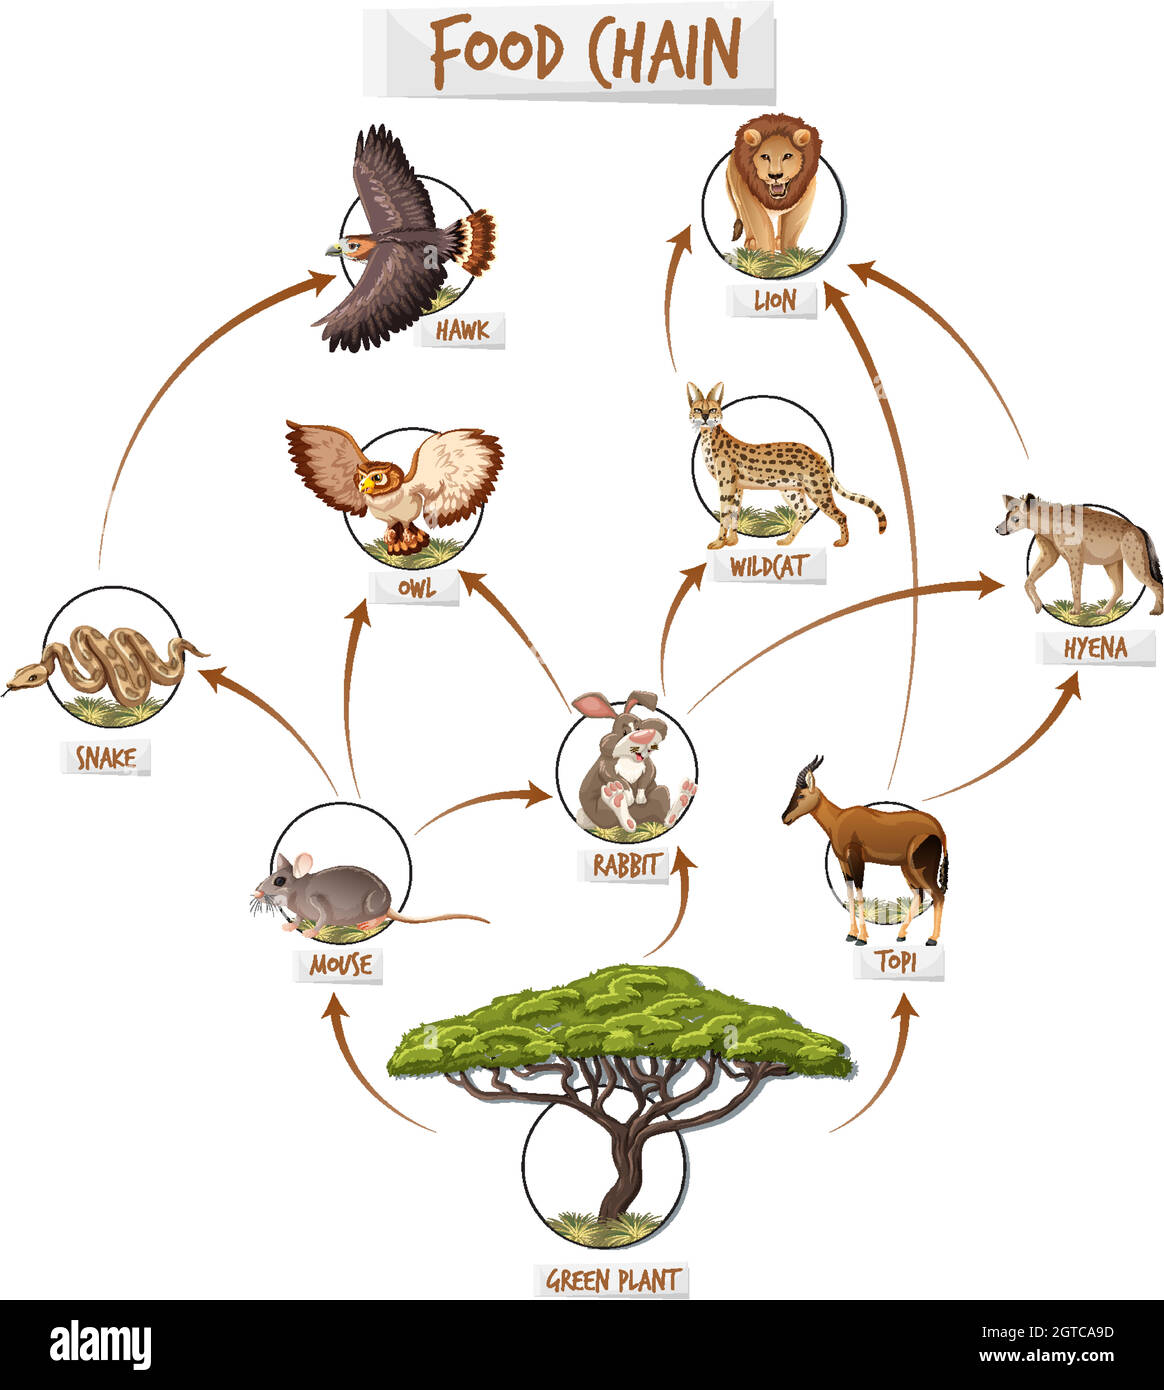 Food chain diagram concept Stock Vector